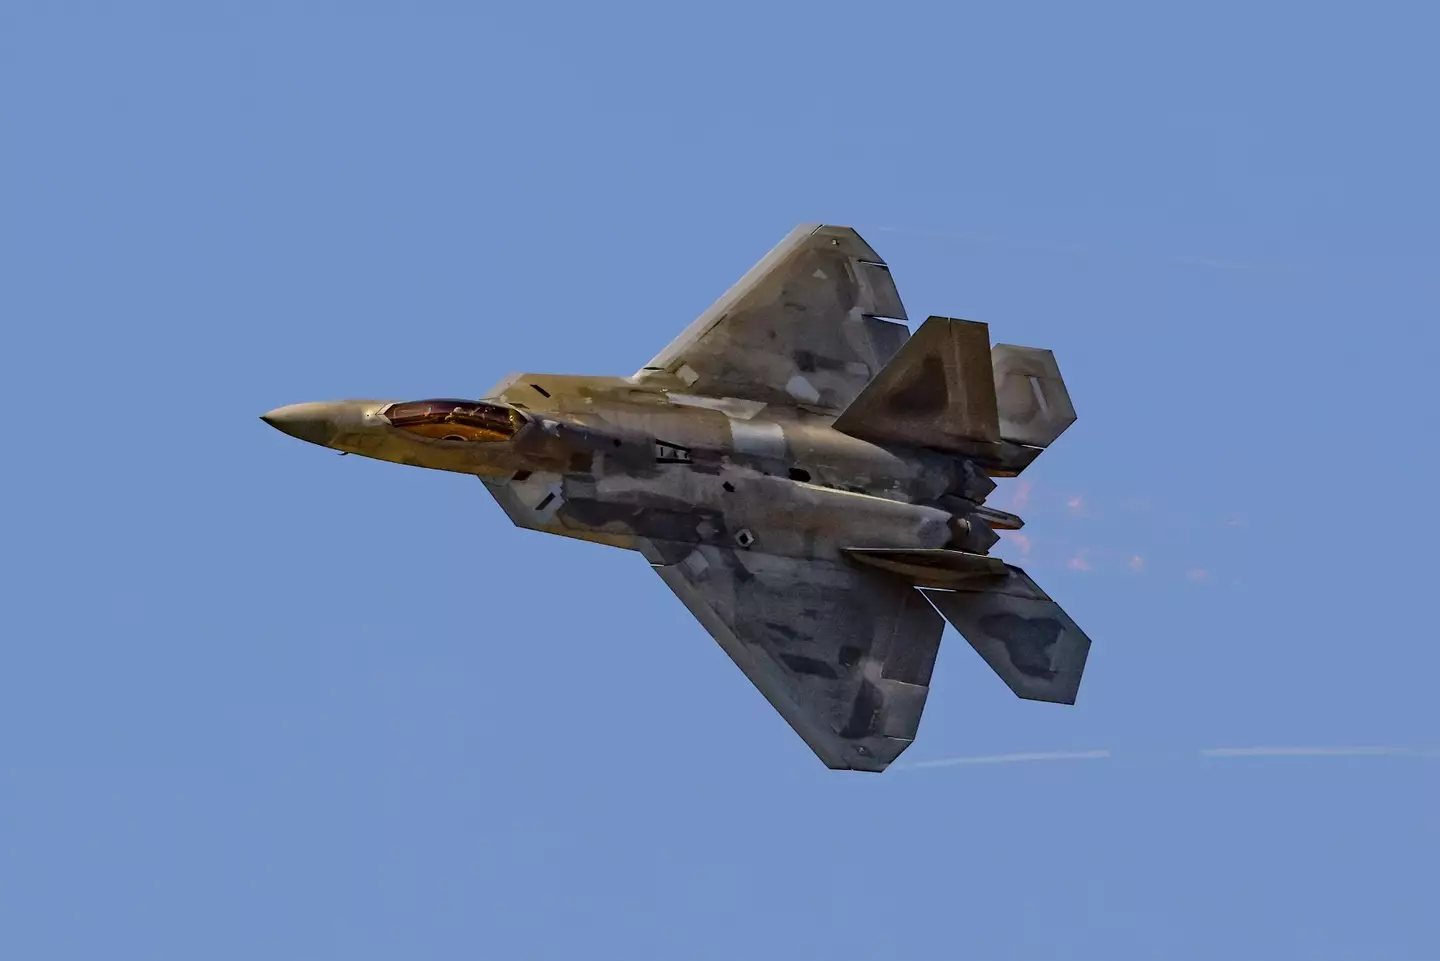 An F-22 Raptor can hit speeds of 1,500mph.